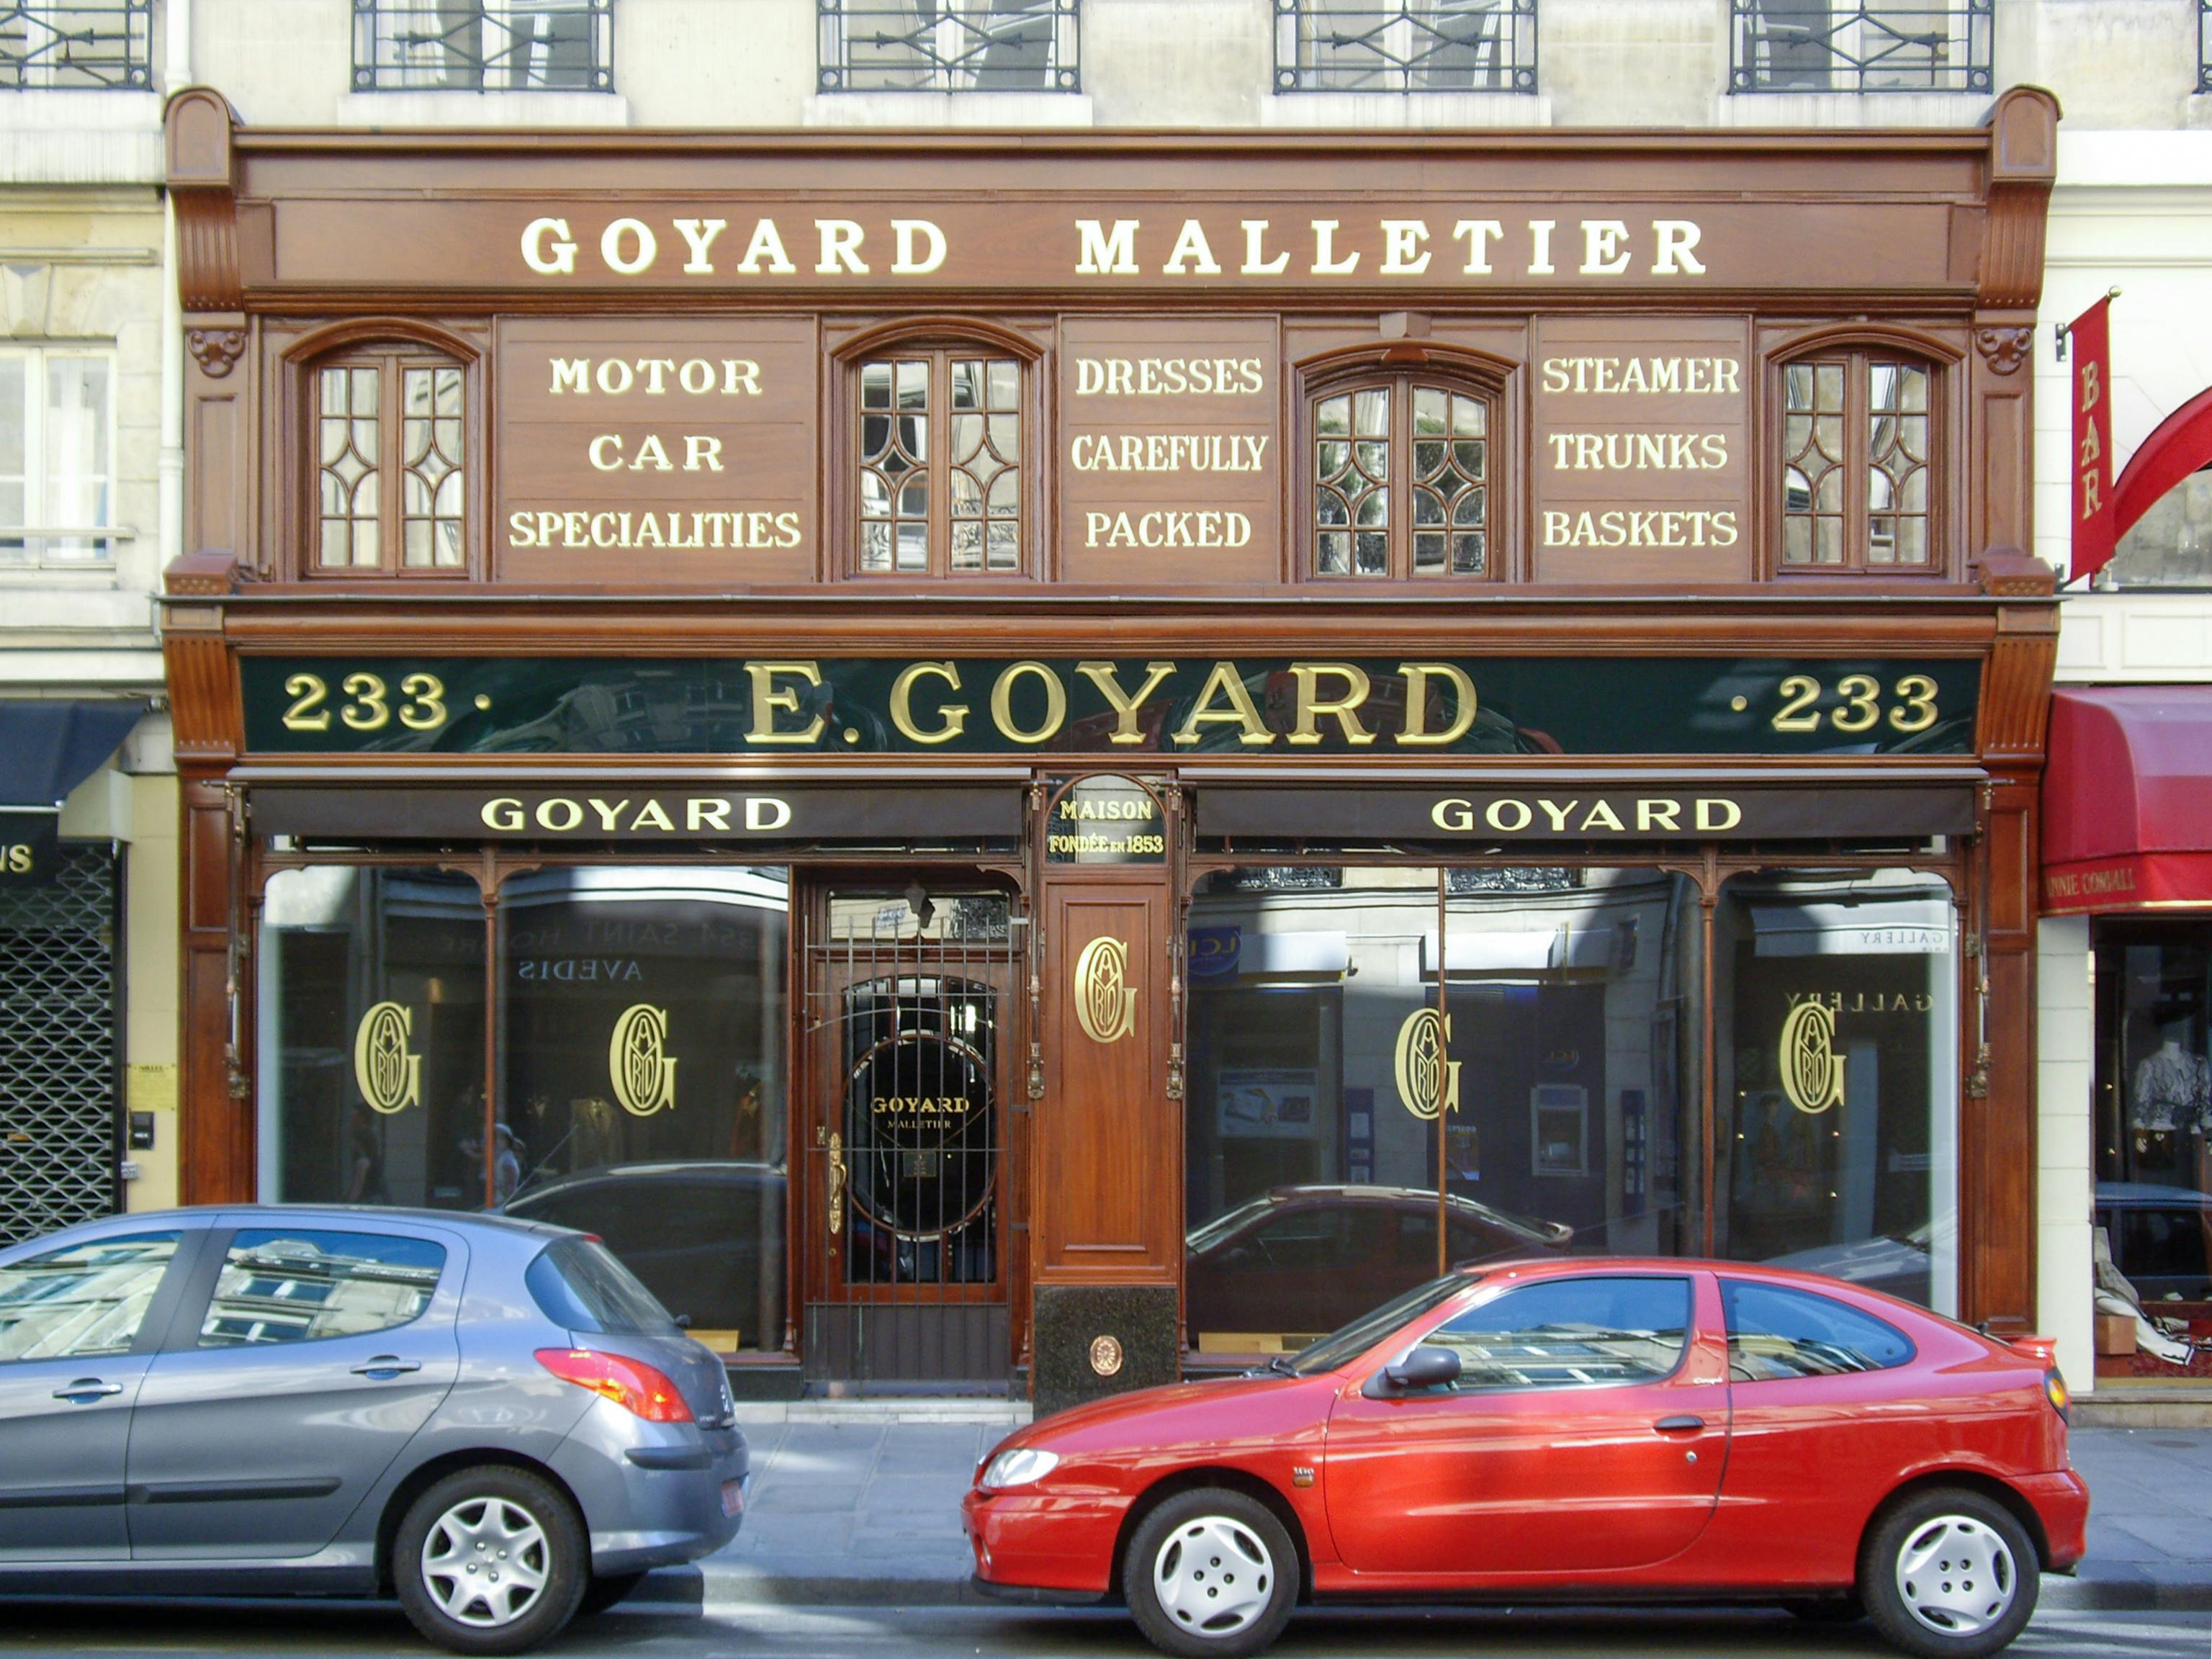 Old Goyard trunk - History Luxury house Paris - Malle2luxe